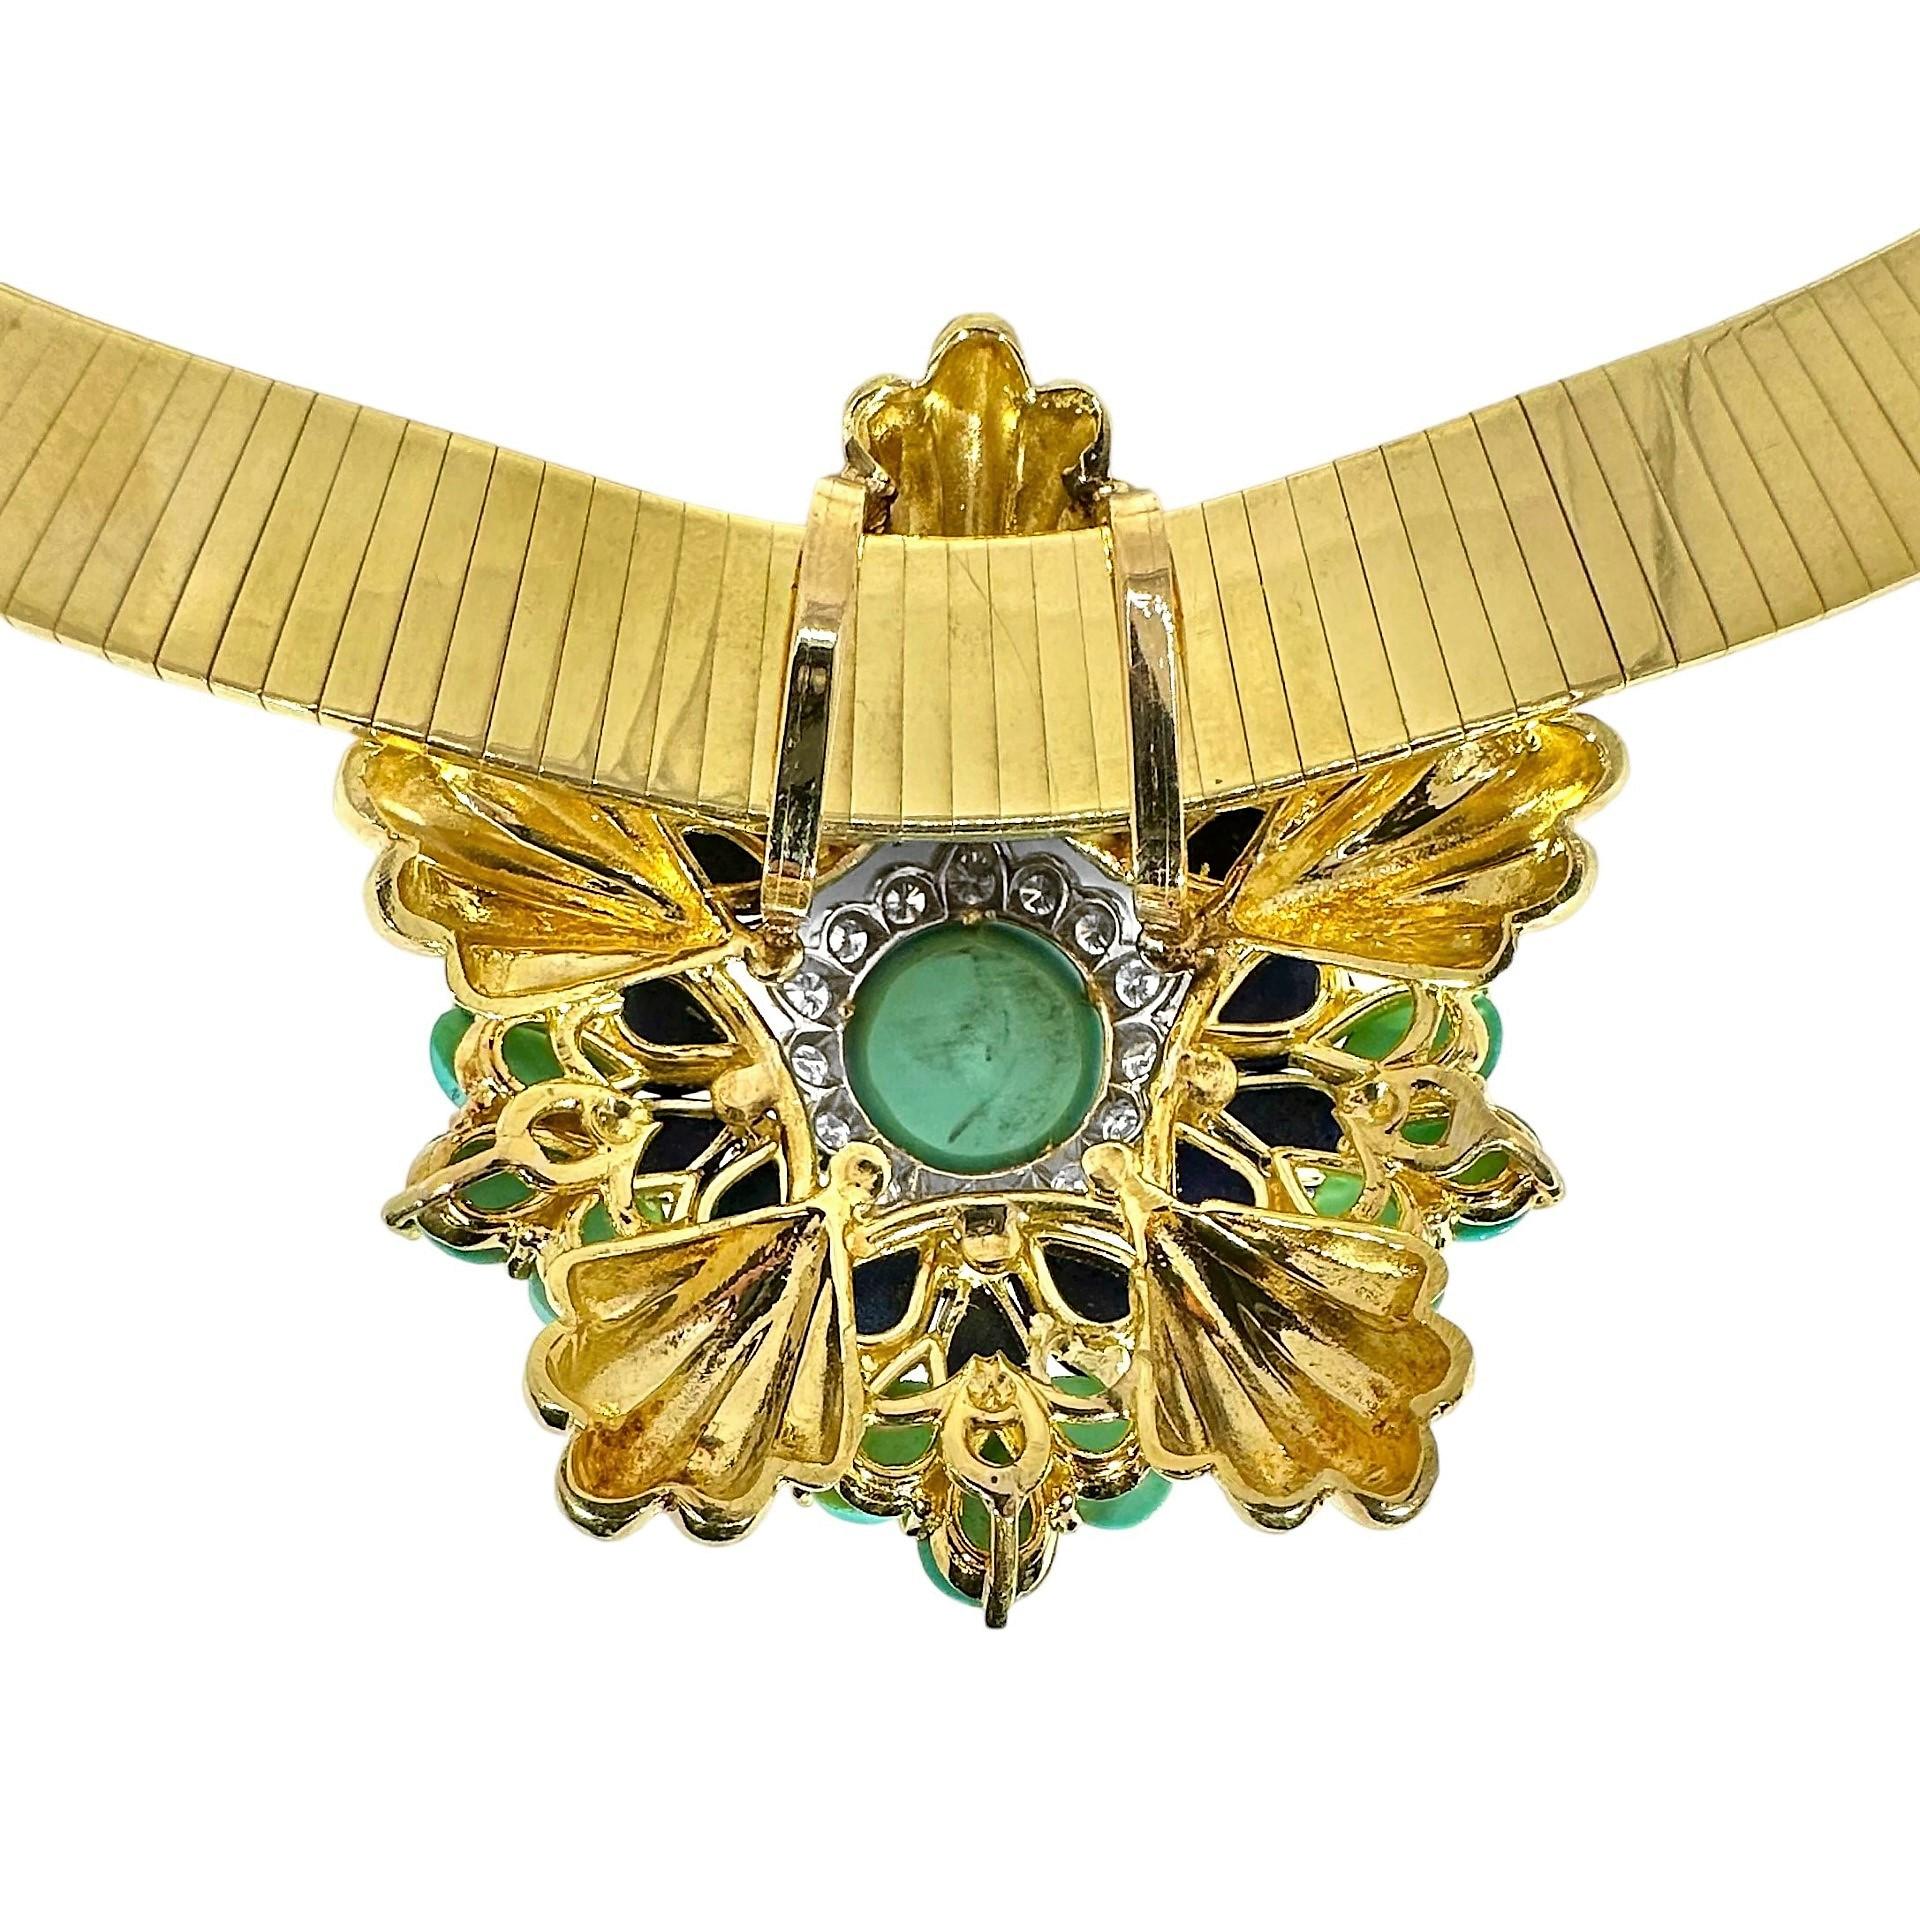 Brilliant Cut Elegant, Yellow Gold, Turquoise, Lapis, and Diamond Large Pendant by Montclair For Sale